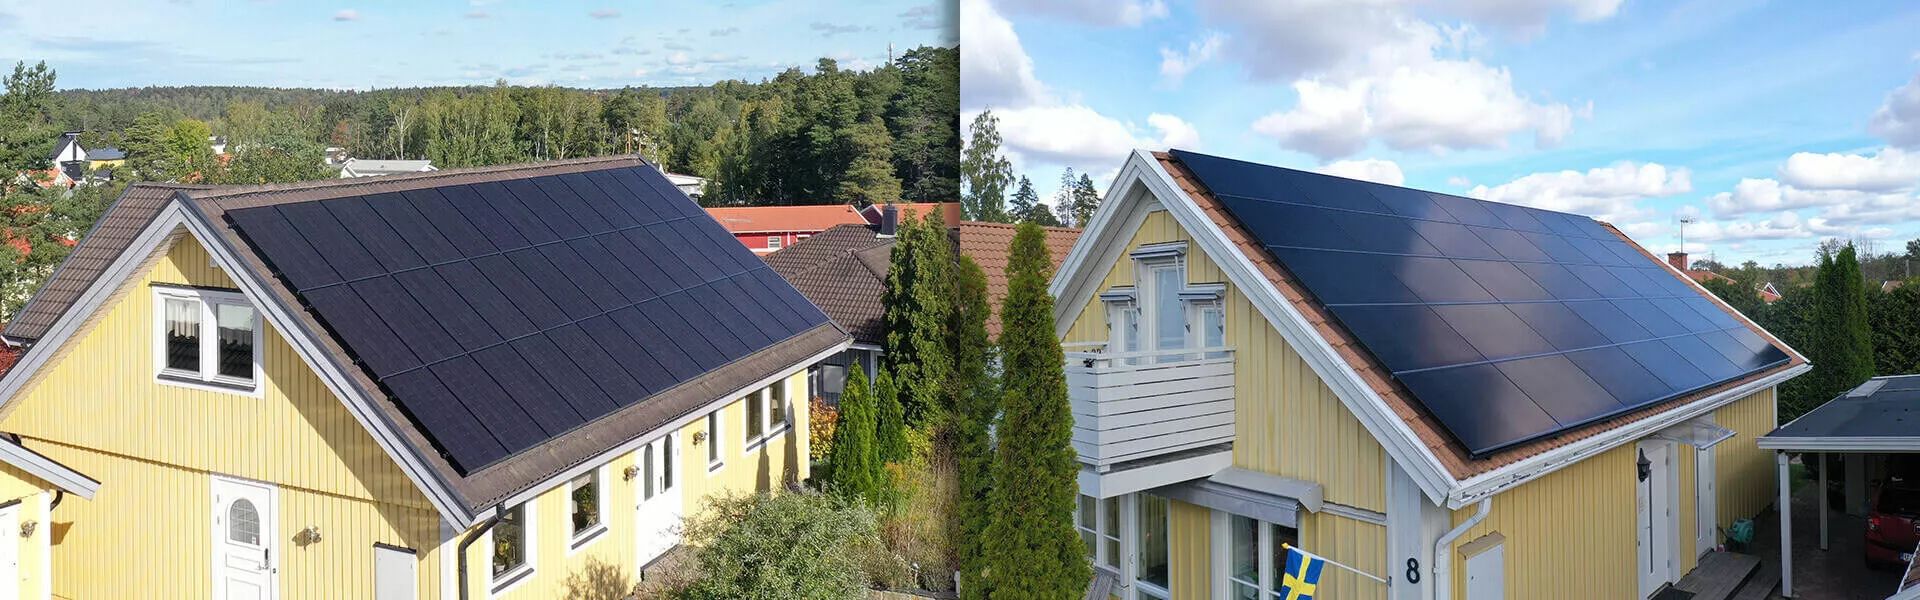 Conventional vs. Maxeon Solar Panels Social Sweden Comparison